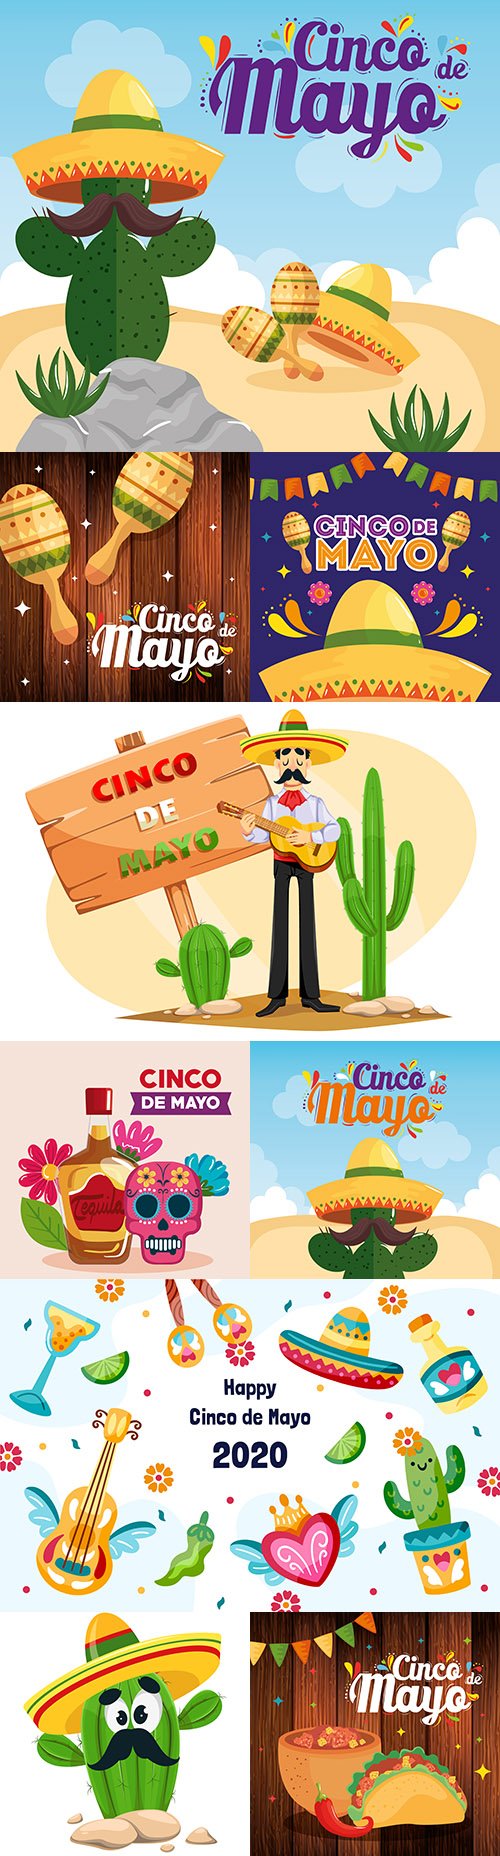 Synco de Mayo Mexican holiday premium illustration 5